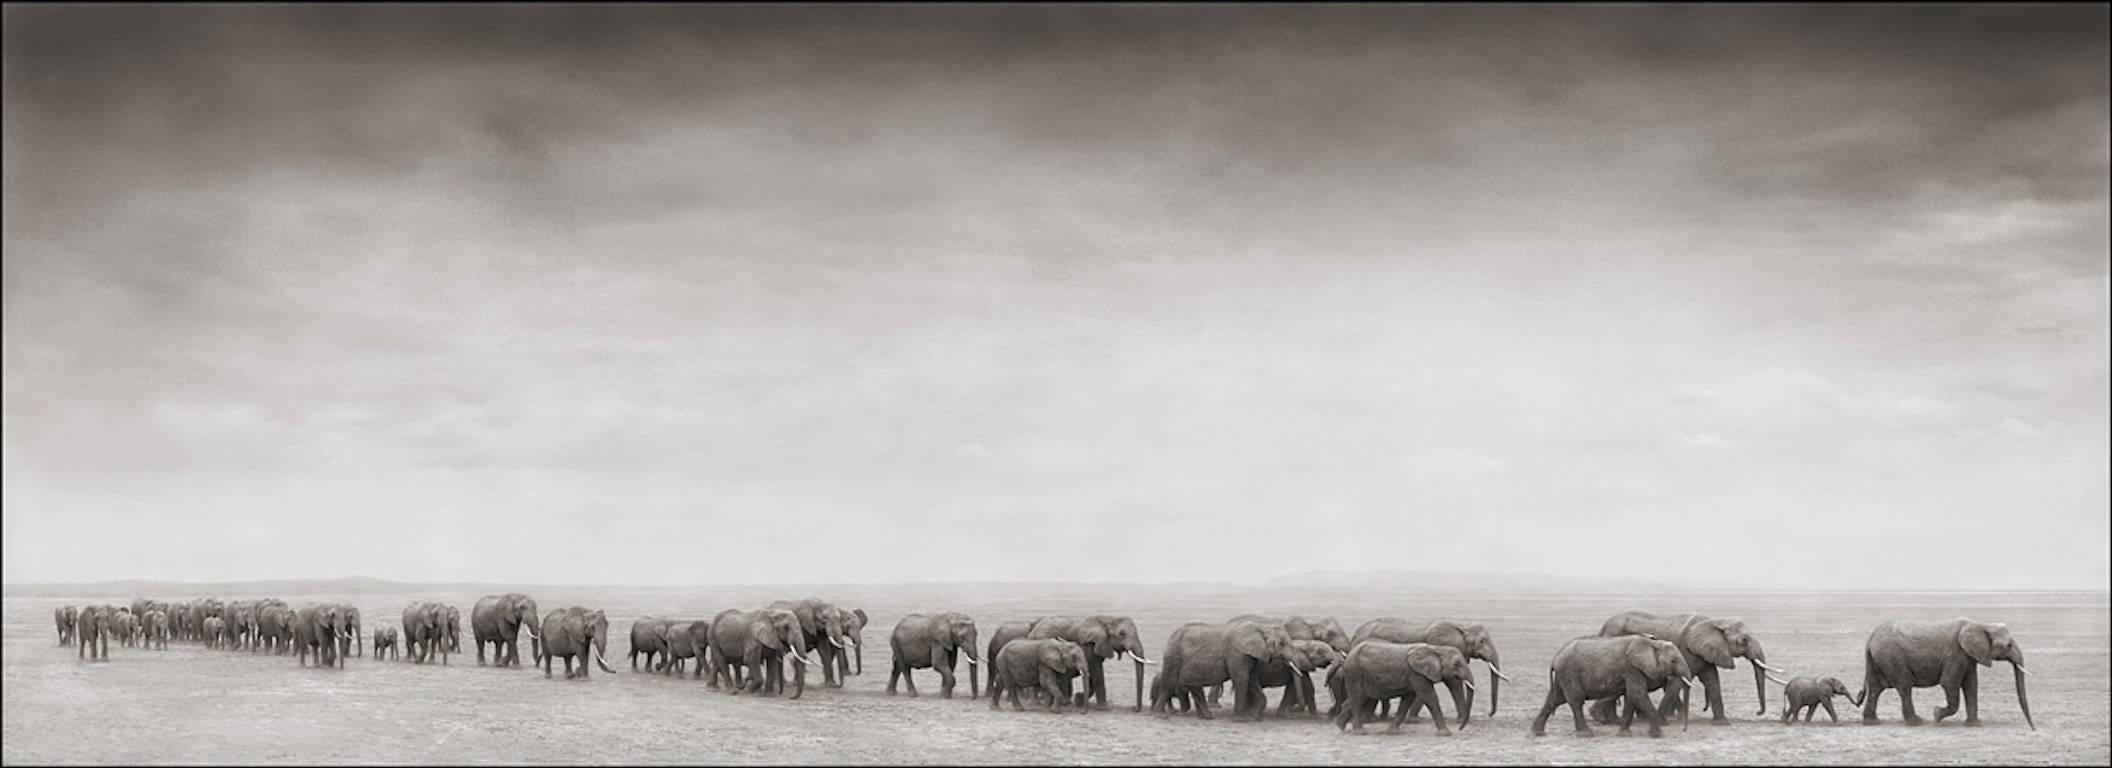 Elephant Train - Photograph by Nick Brandt